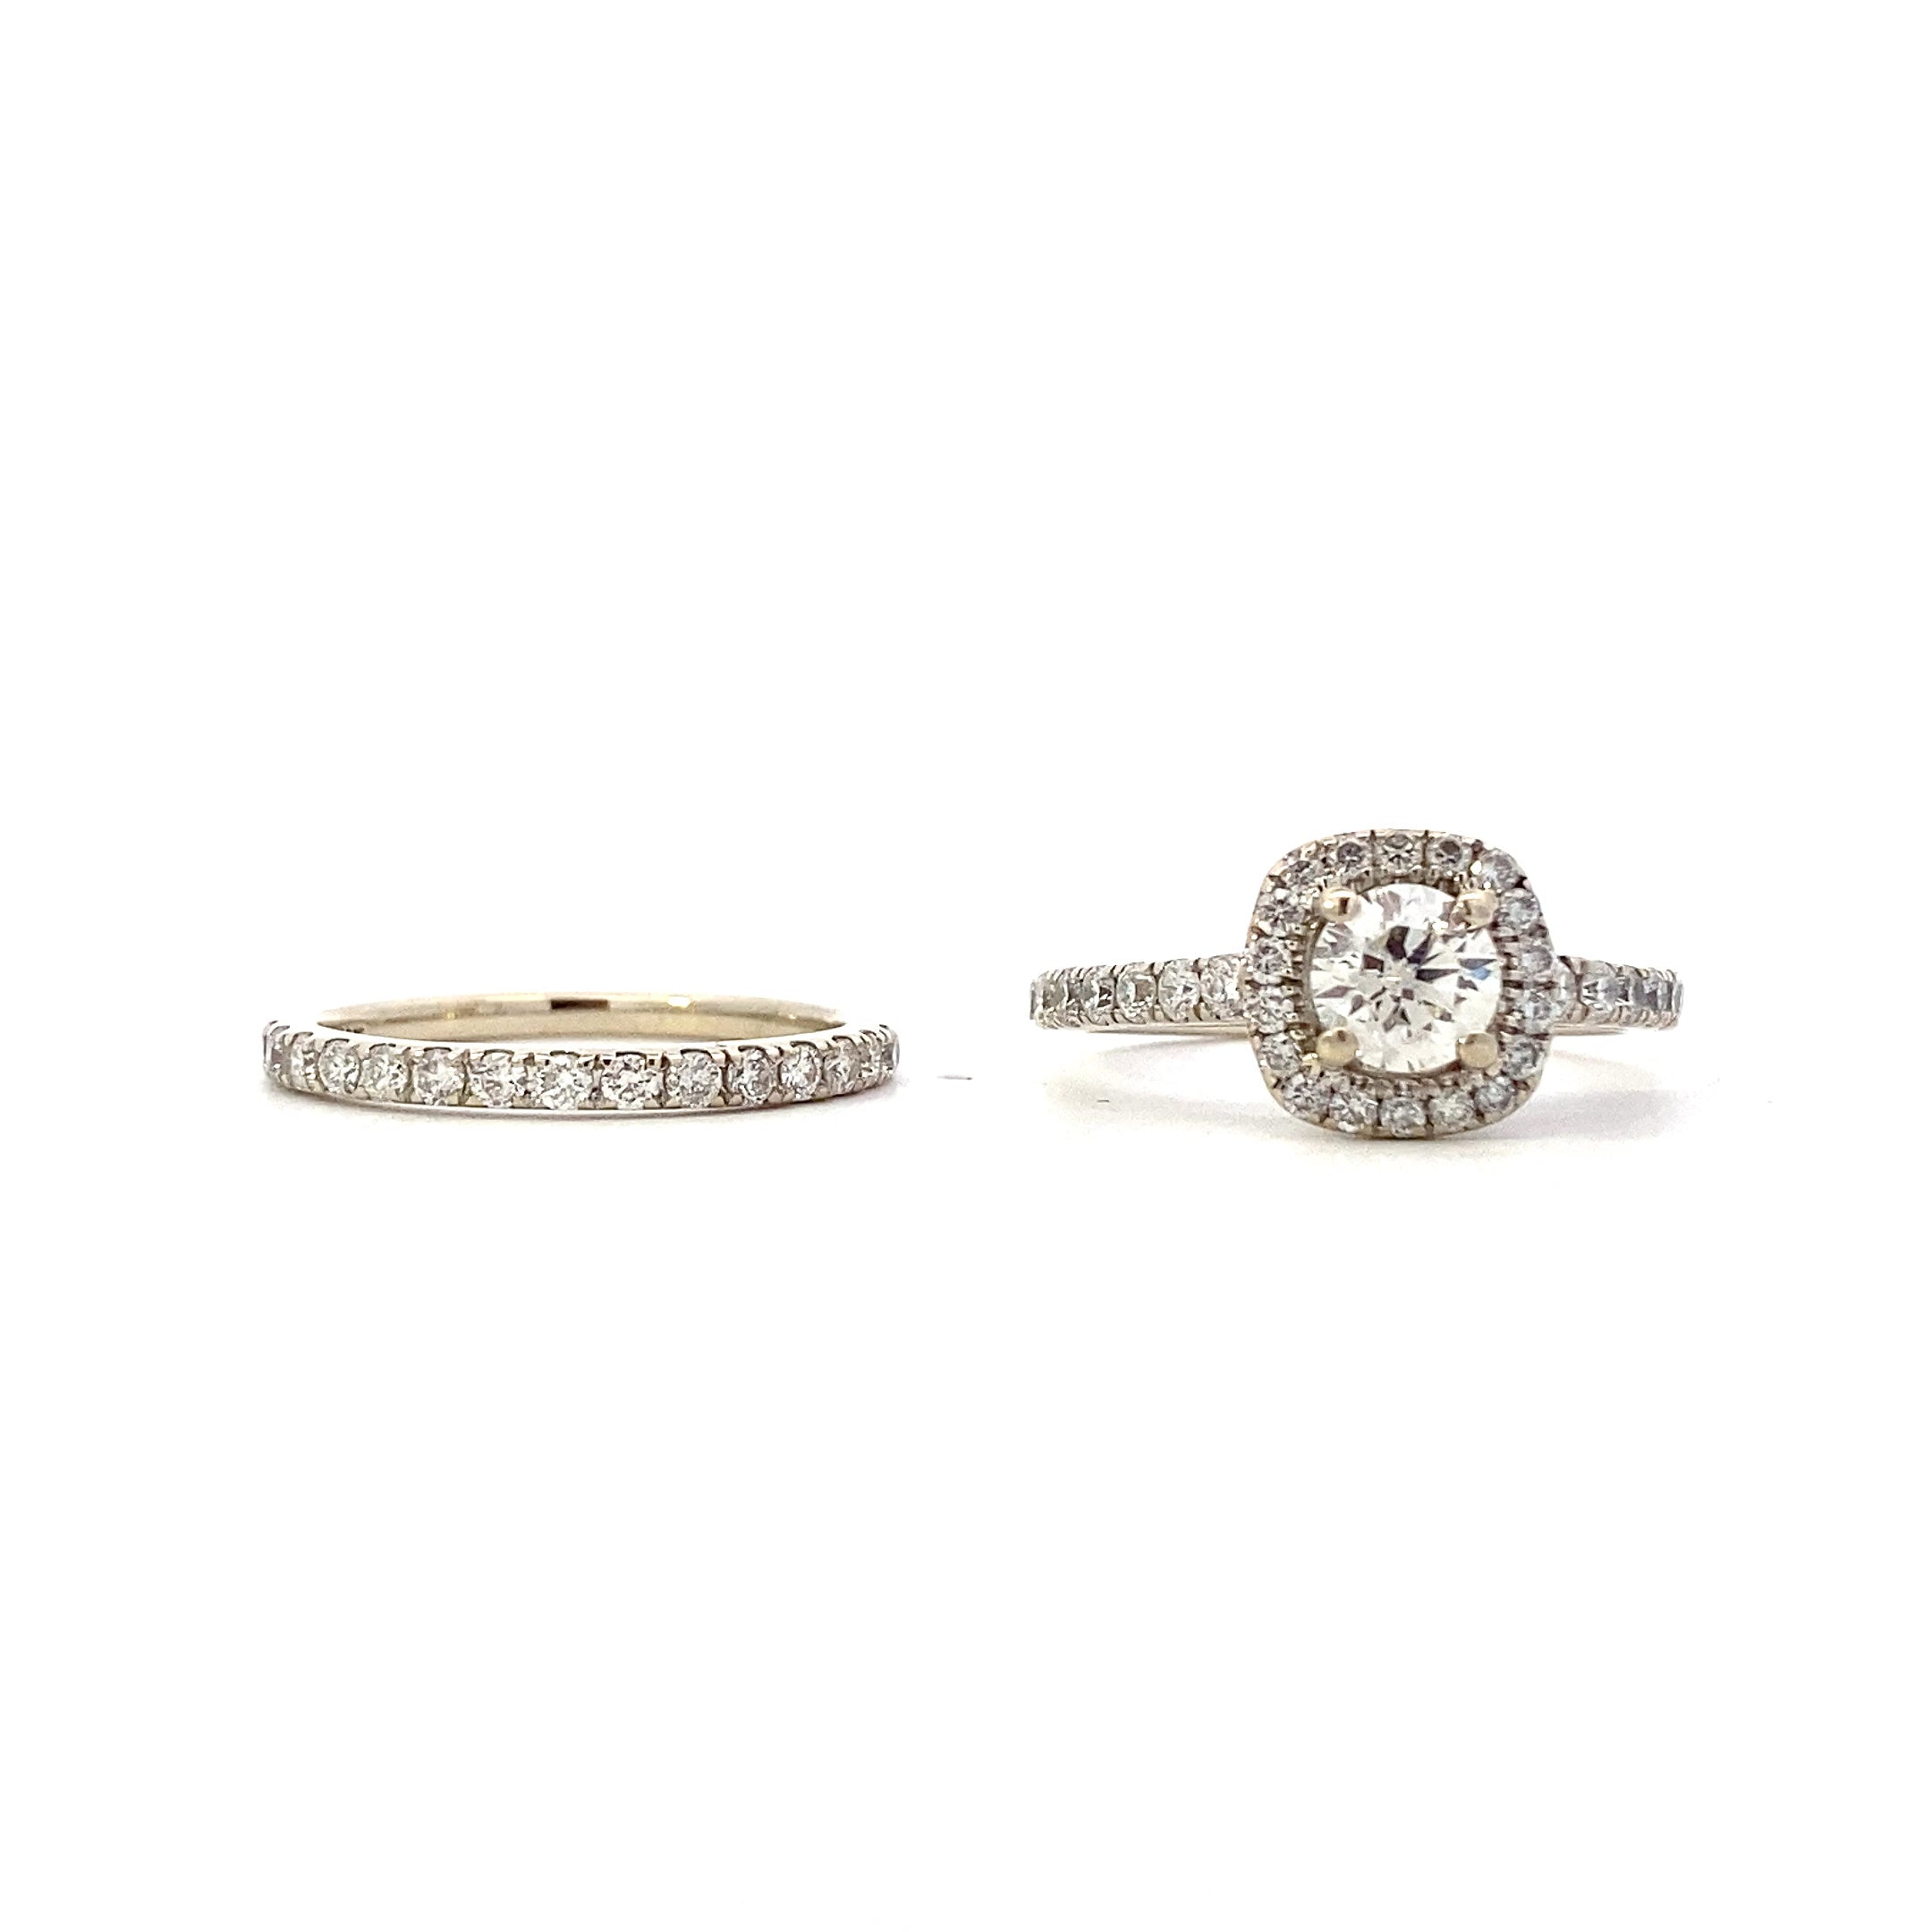 14K White Gold Diamond Engagement & Wedding Ring Set - 2.0ct